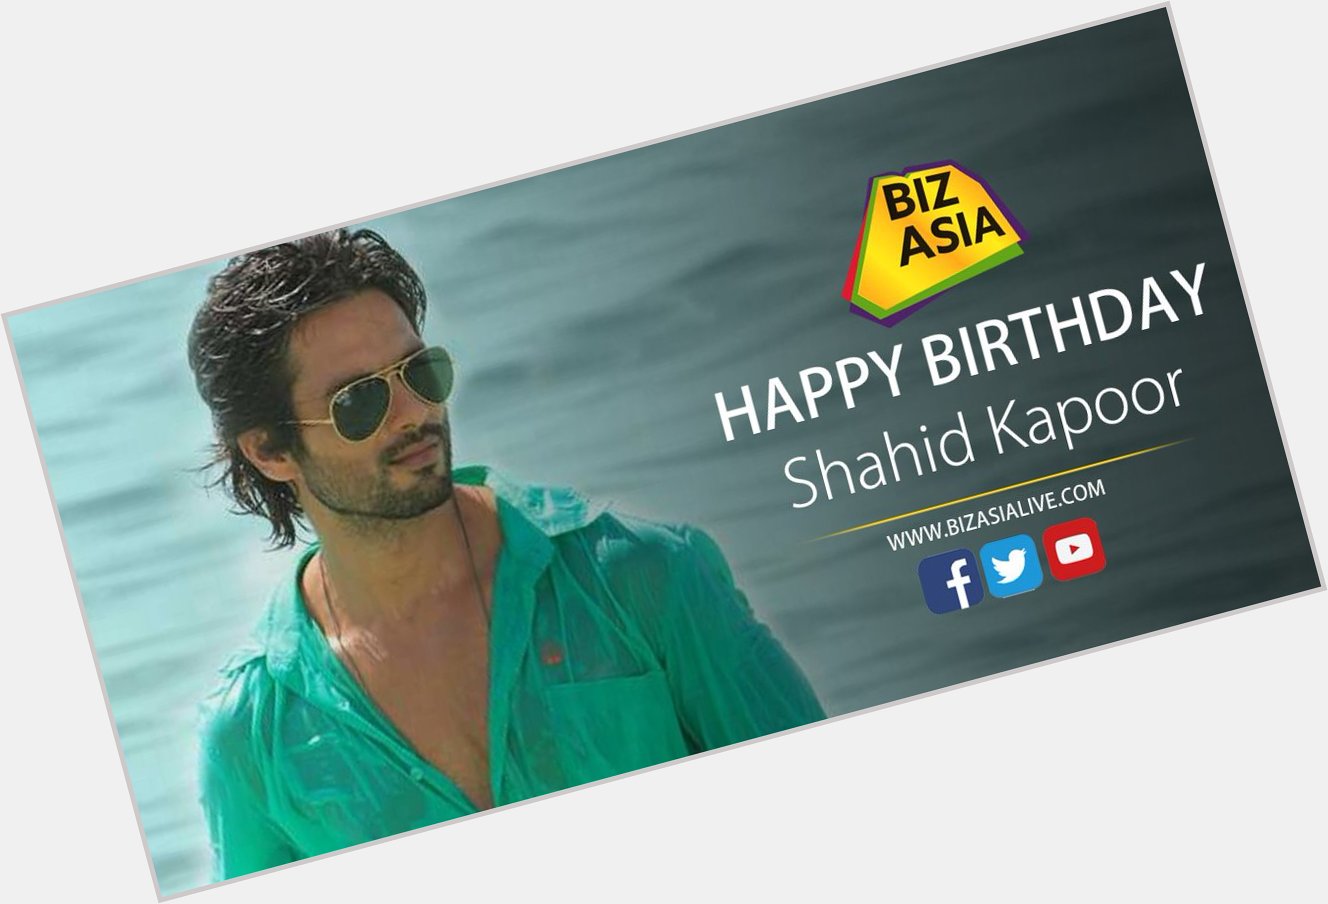  wishes Shahid Kapoor a very happy birthday.  